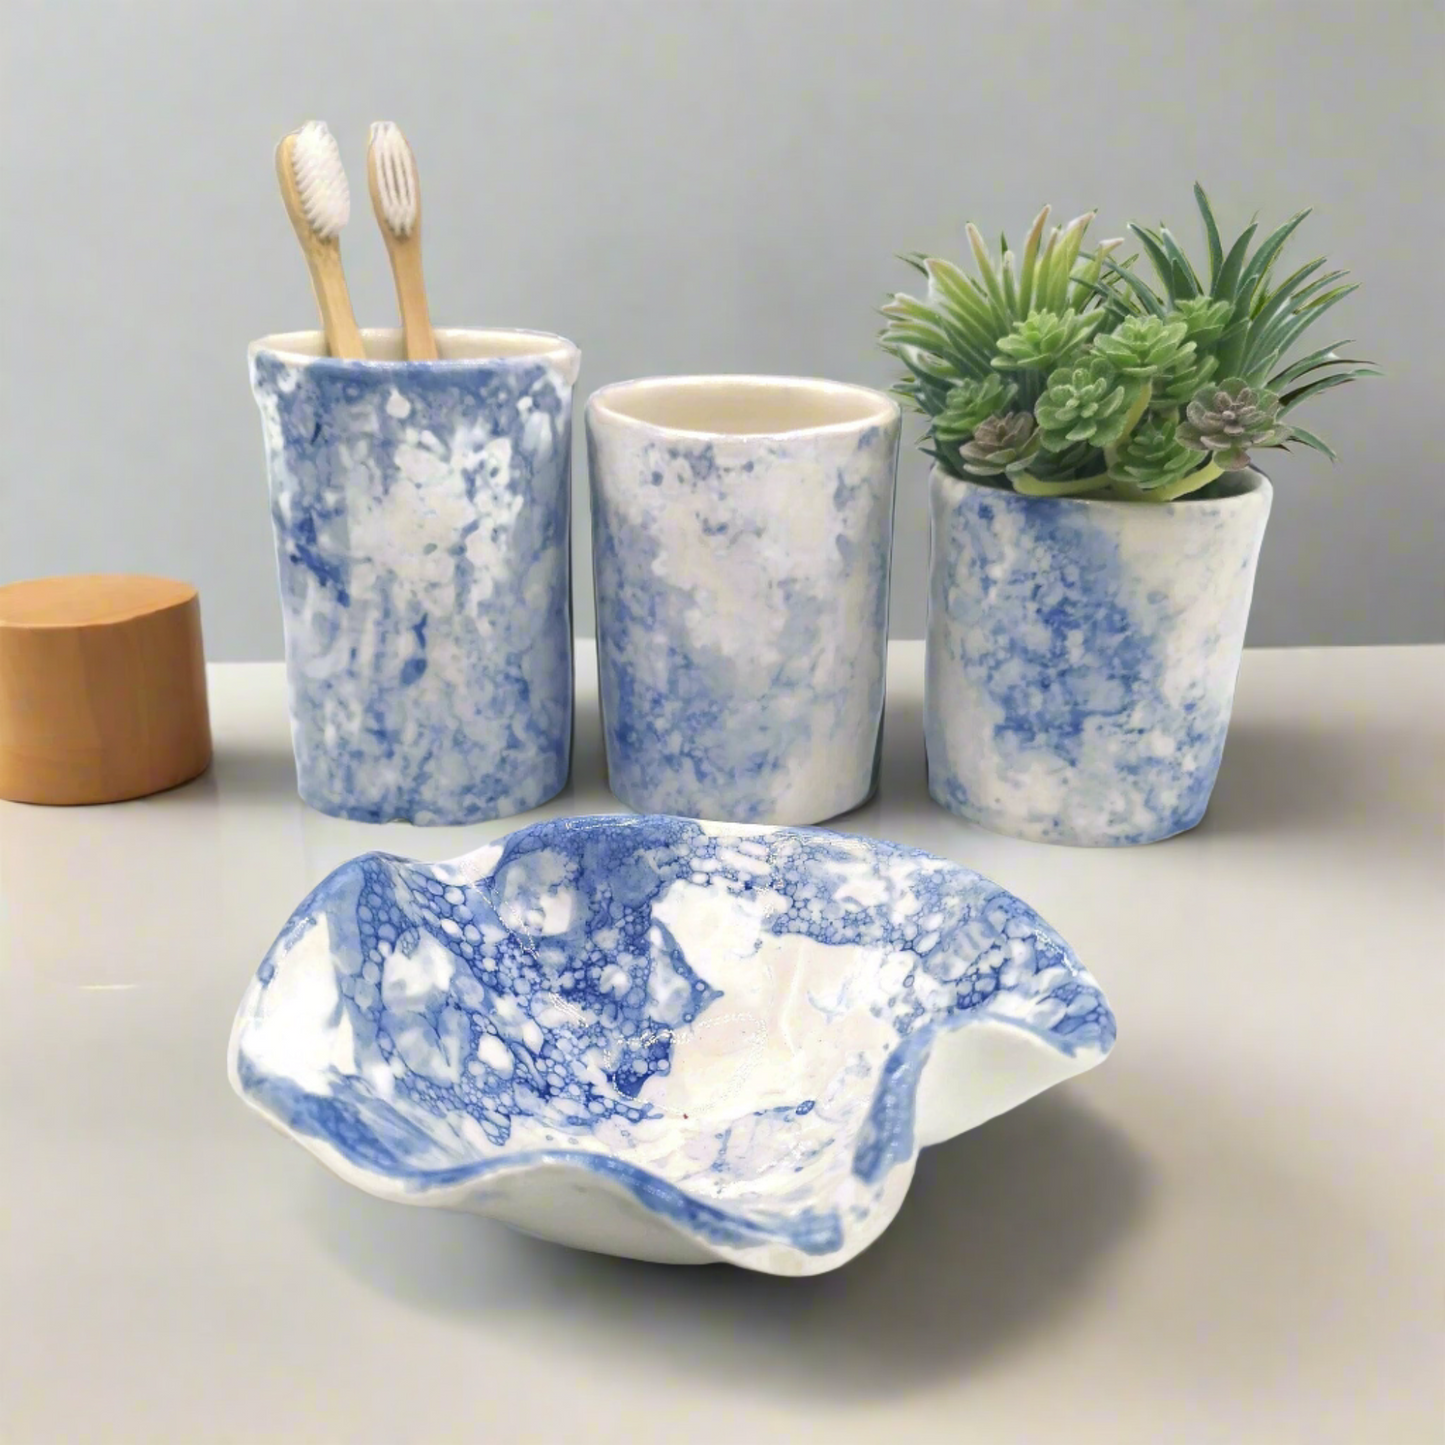 Unique Irregular Shape Handmade Ceramic Trinket Dish - White and Blue Small Clay Soap Bowl for Soap Bars